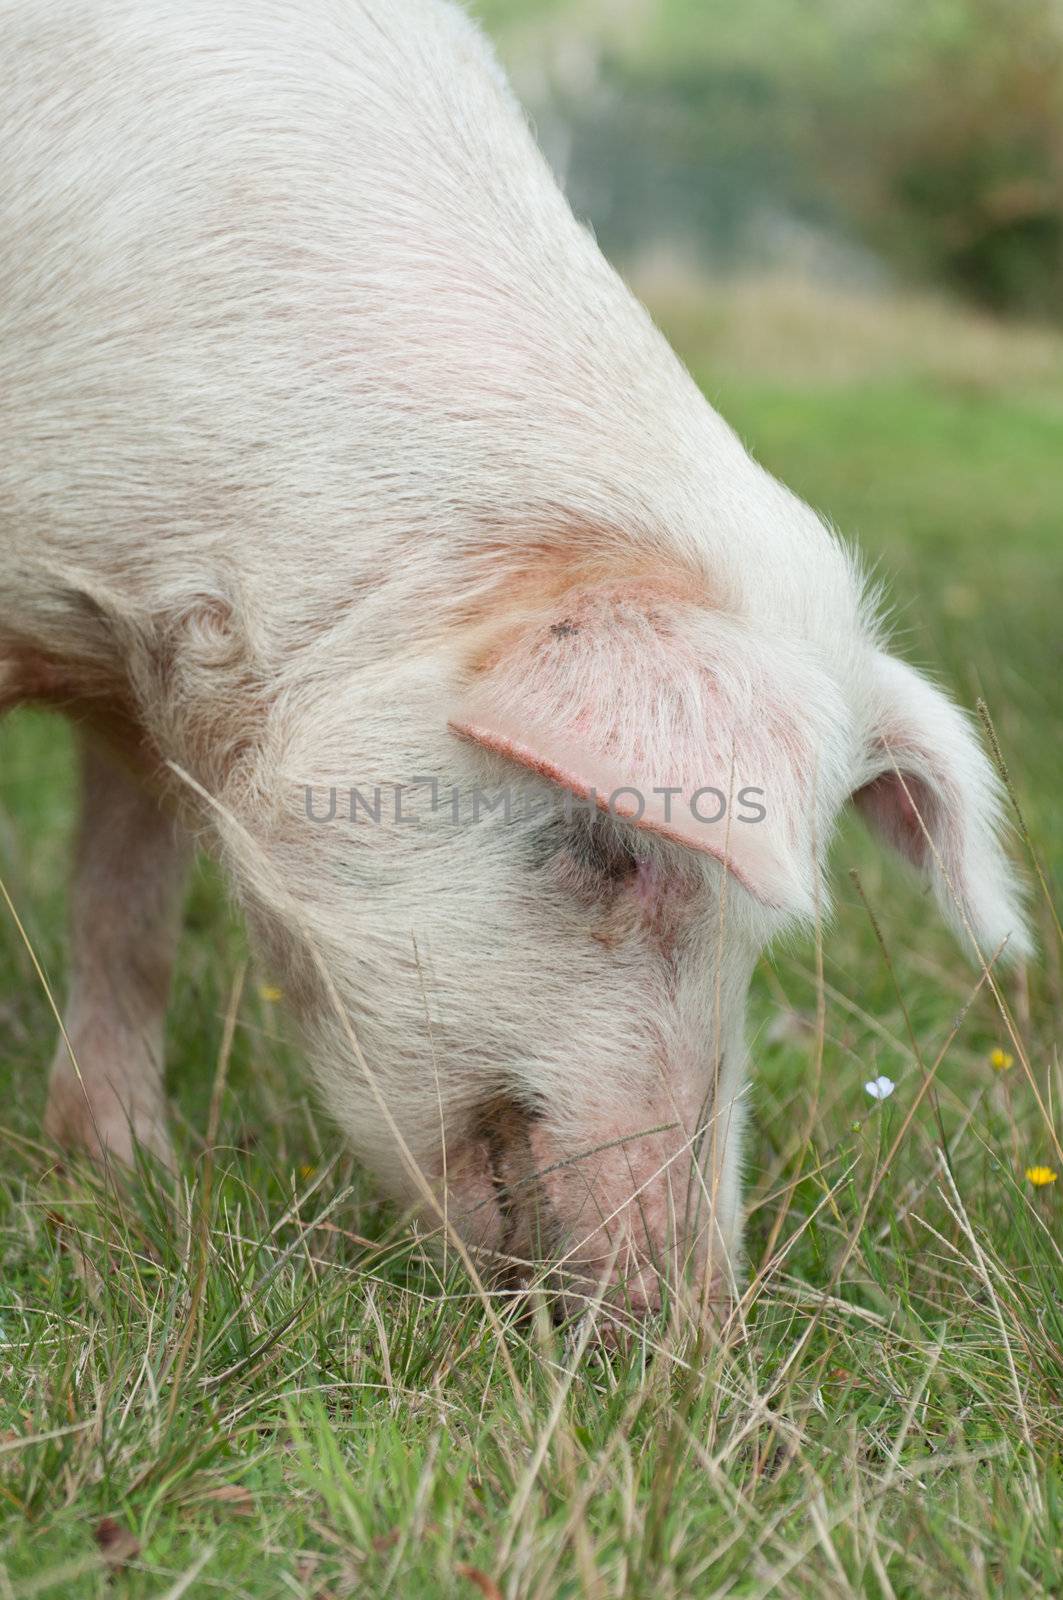 Head closeup on pig eating by bigmagic